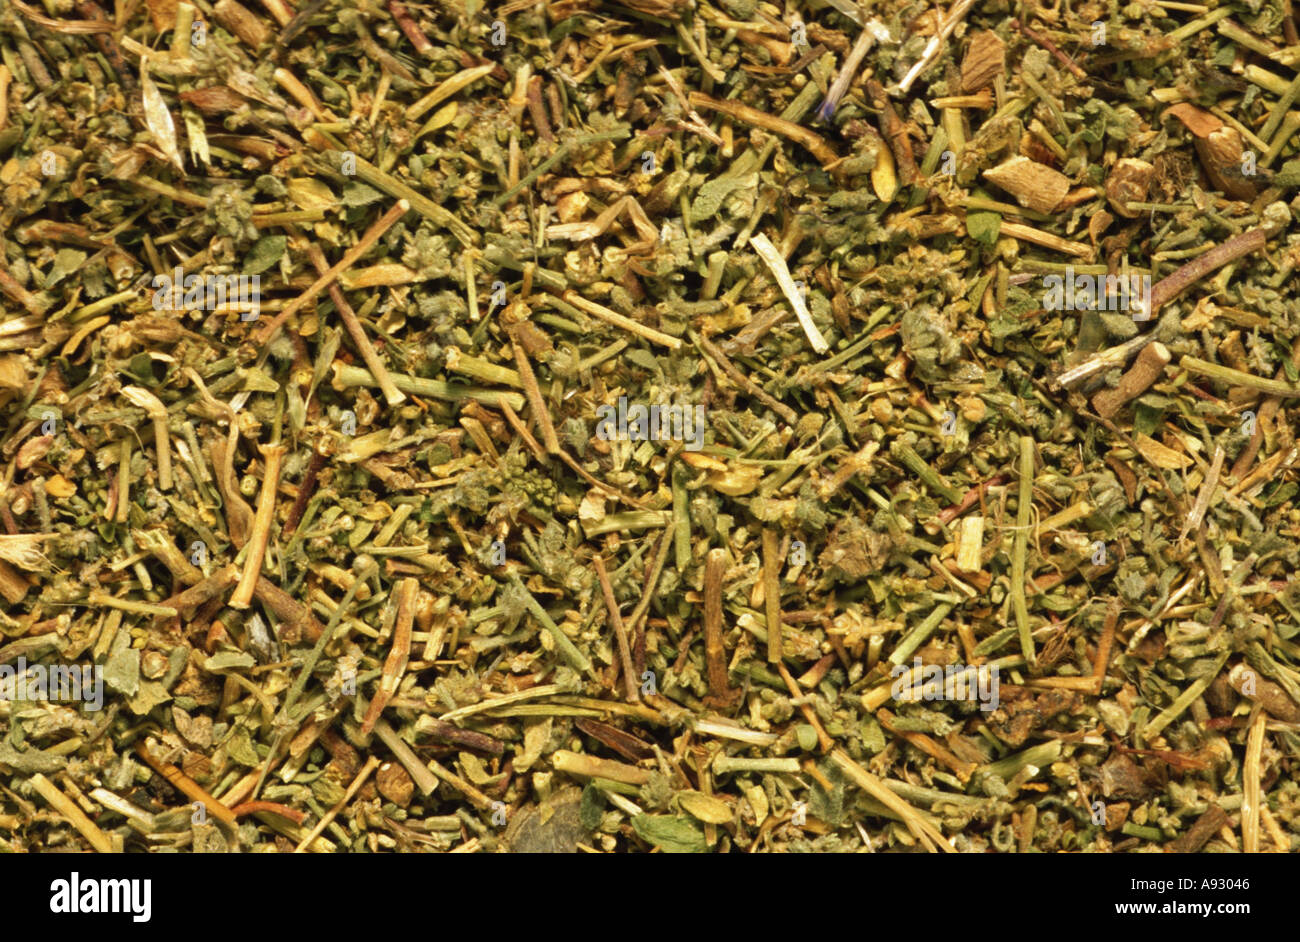 Medicinal plant dried herb of Ruptore Wort Bruchkraut Herniaria glabra Stock Photo